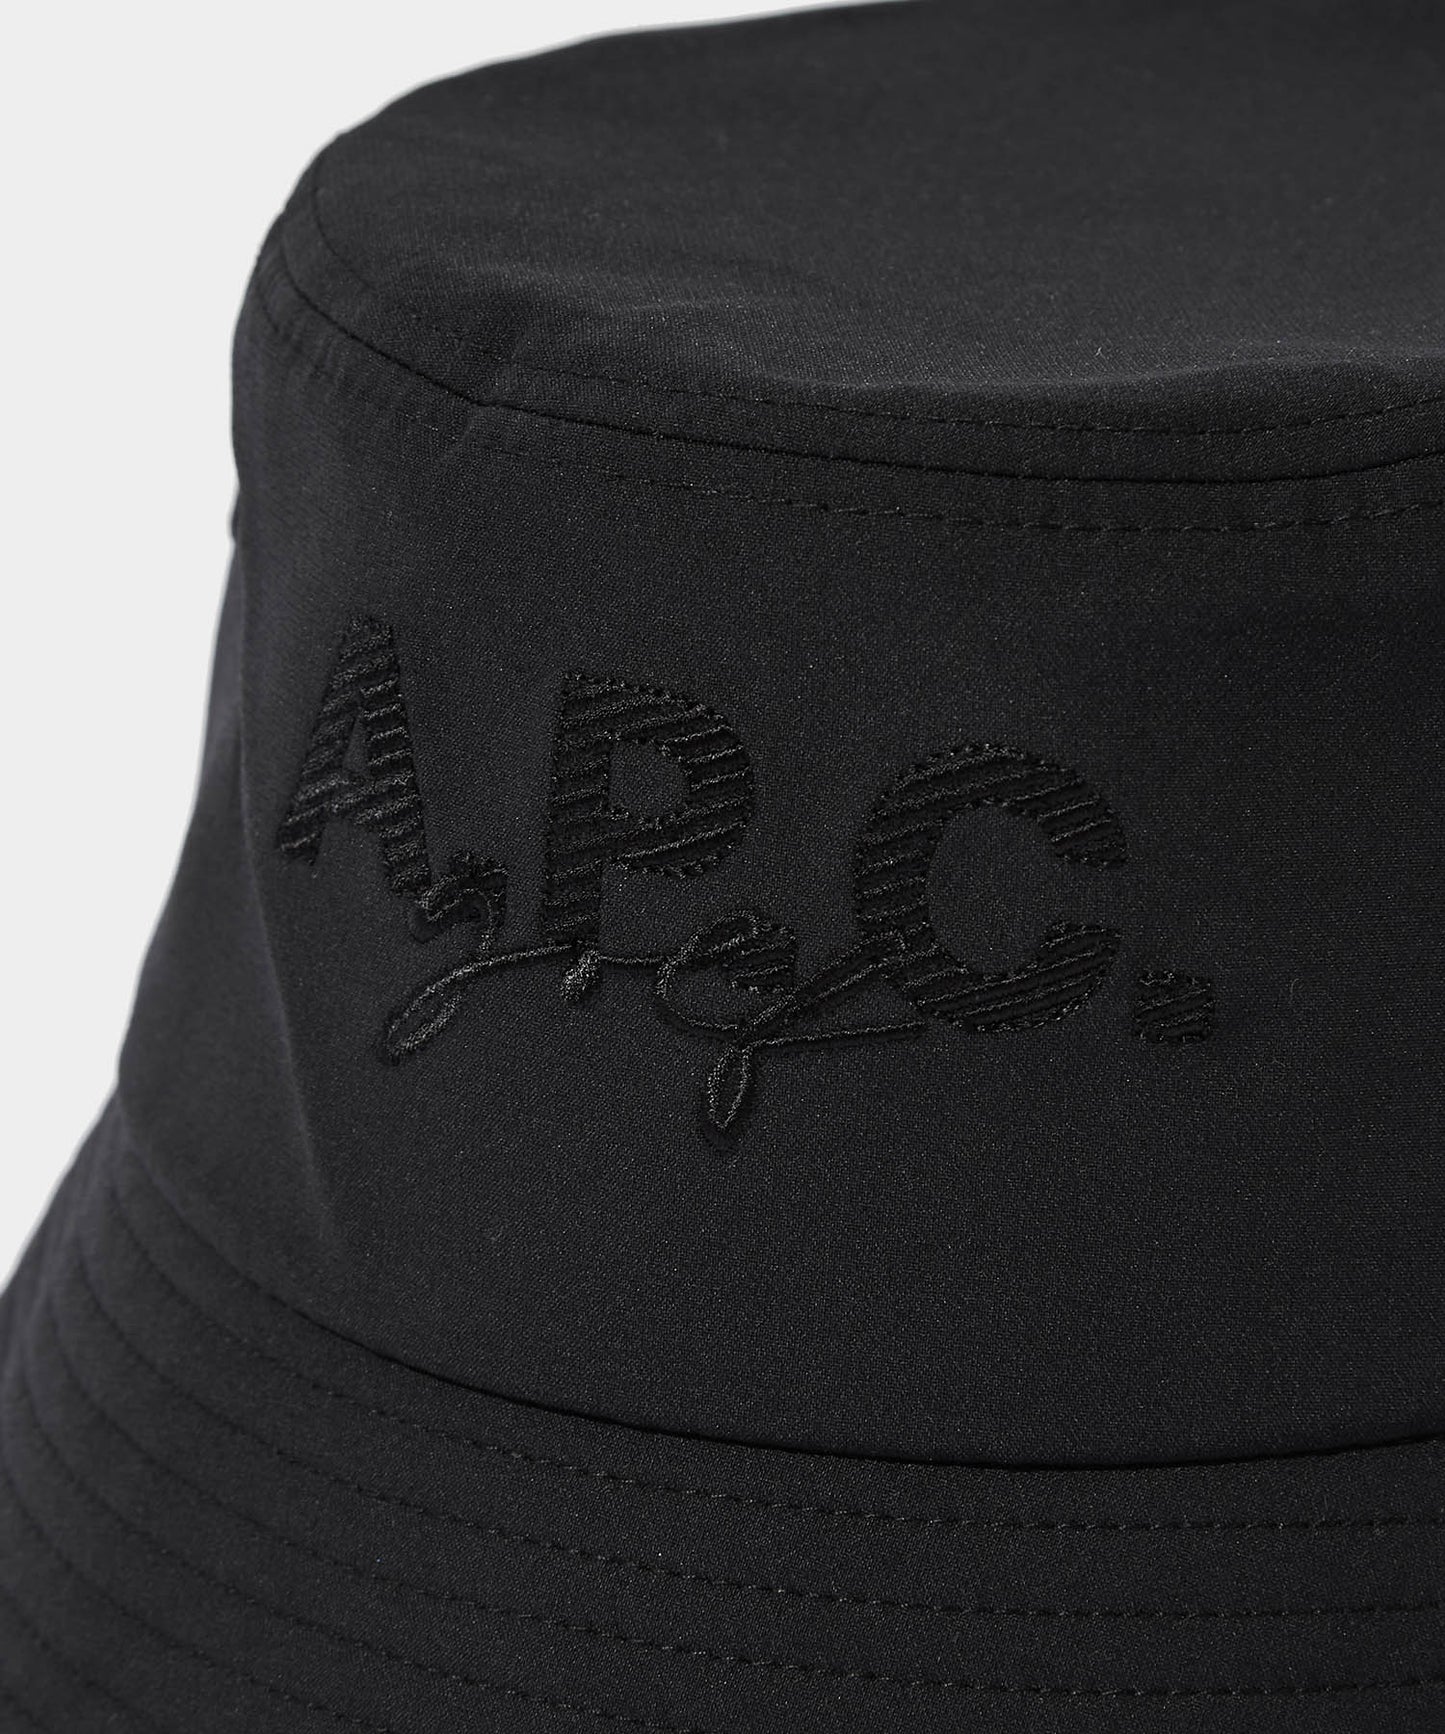 A.P.C.GOLF CAP BLACK